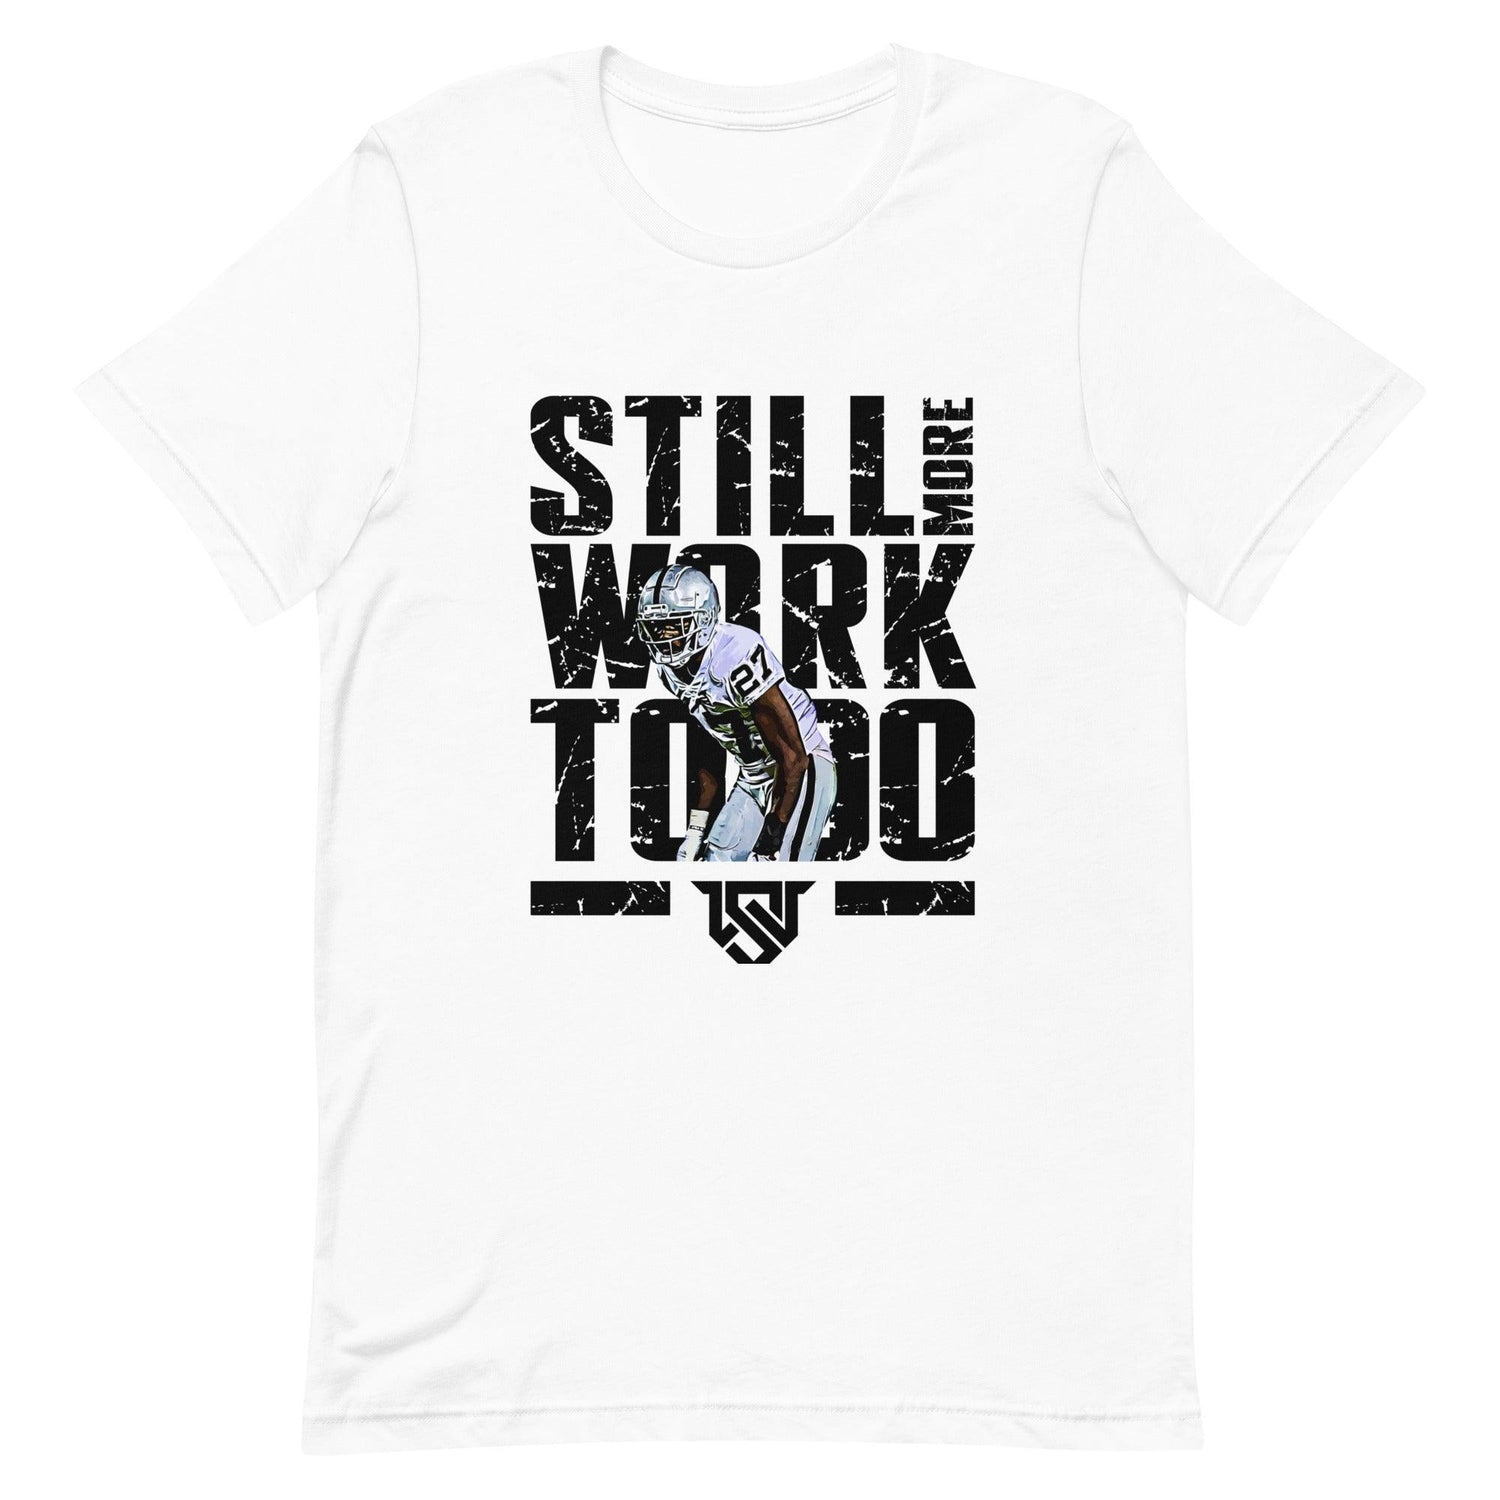 Sam Webb "Still More Work To Do" t-shirt - Fan Arch